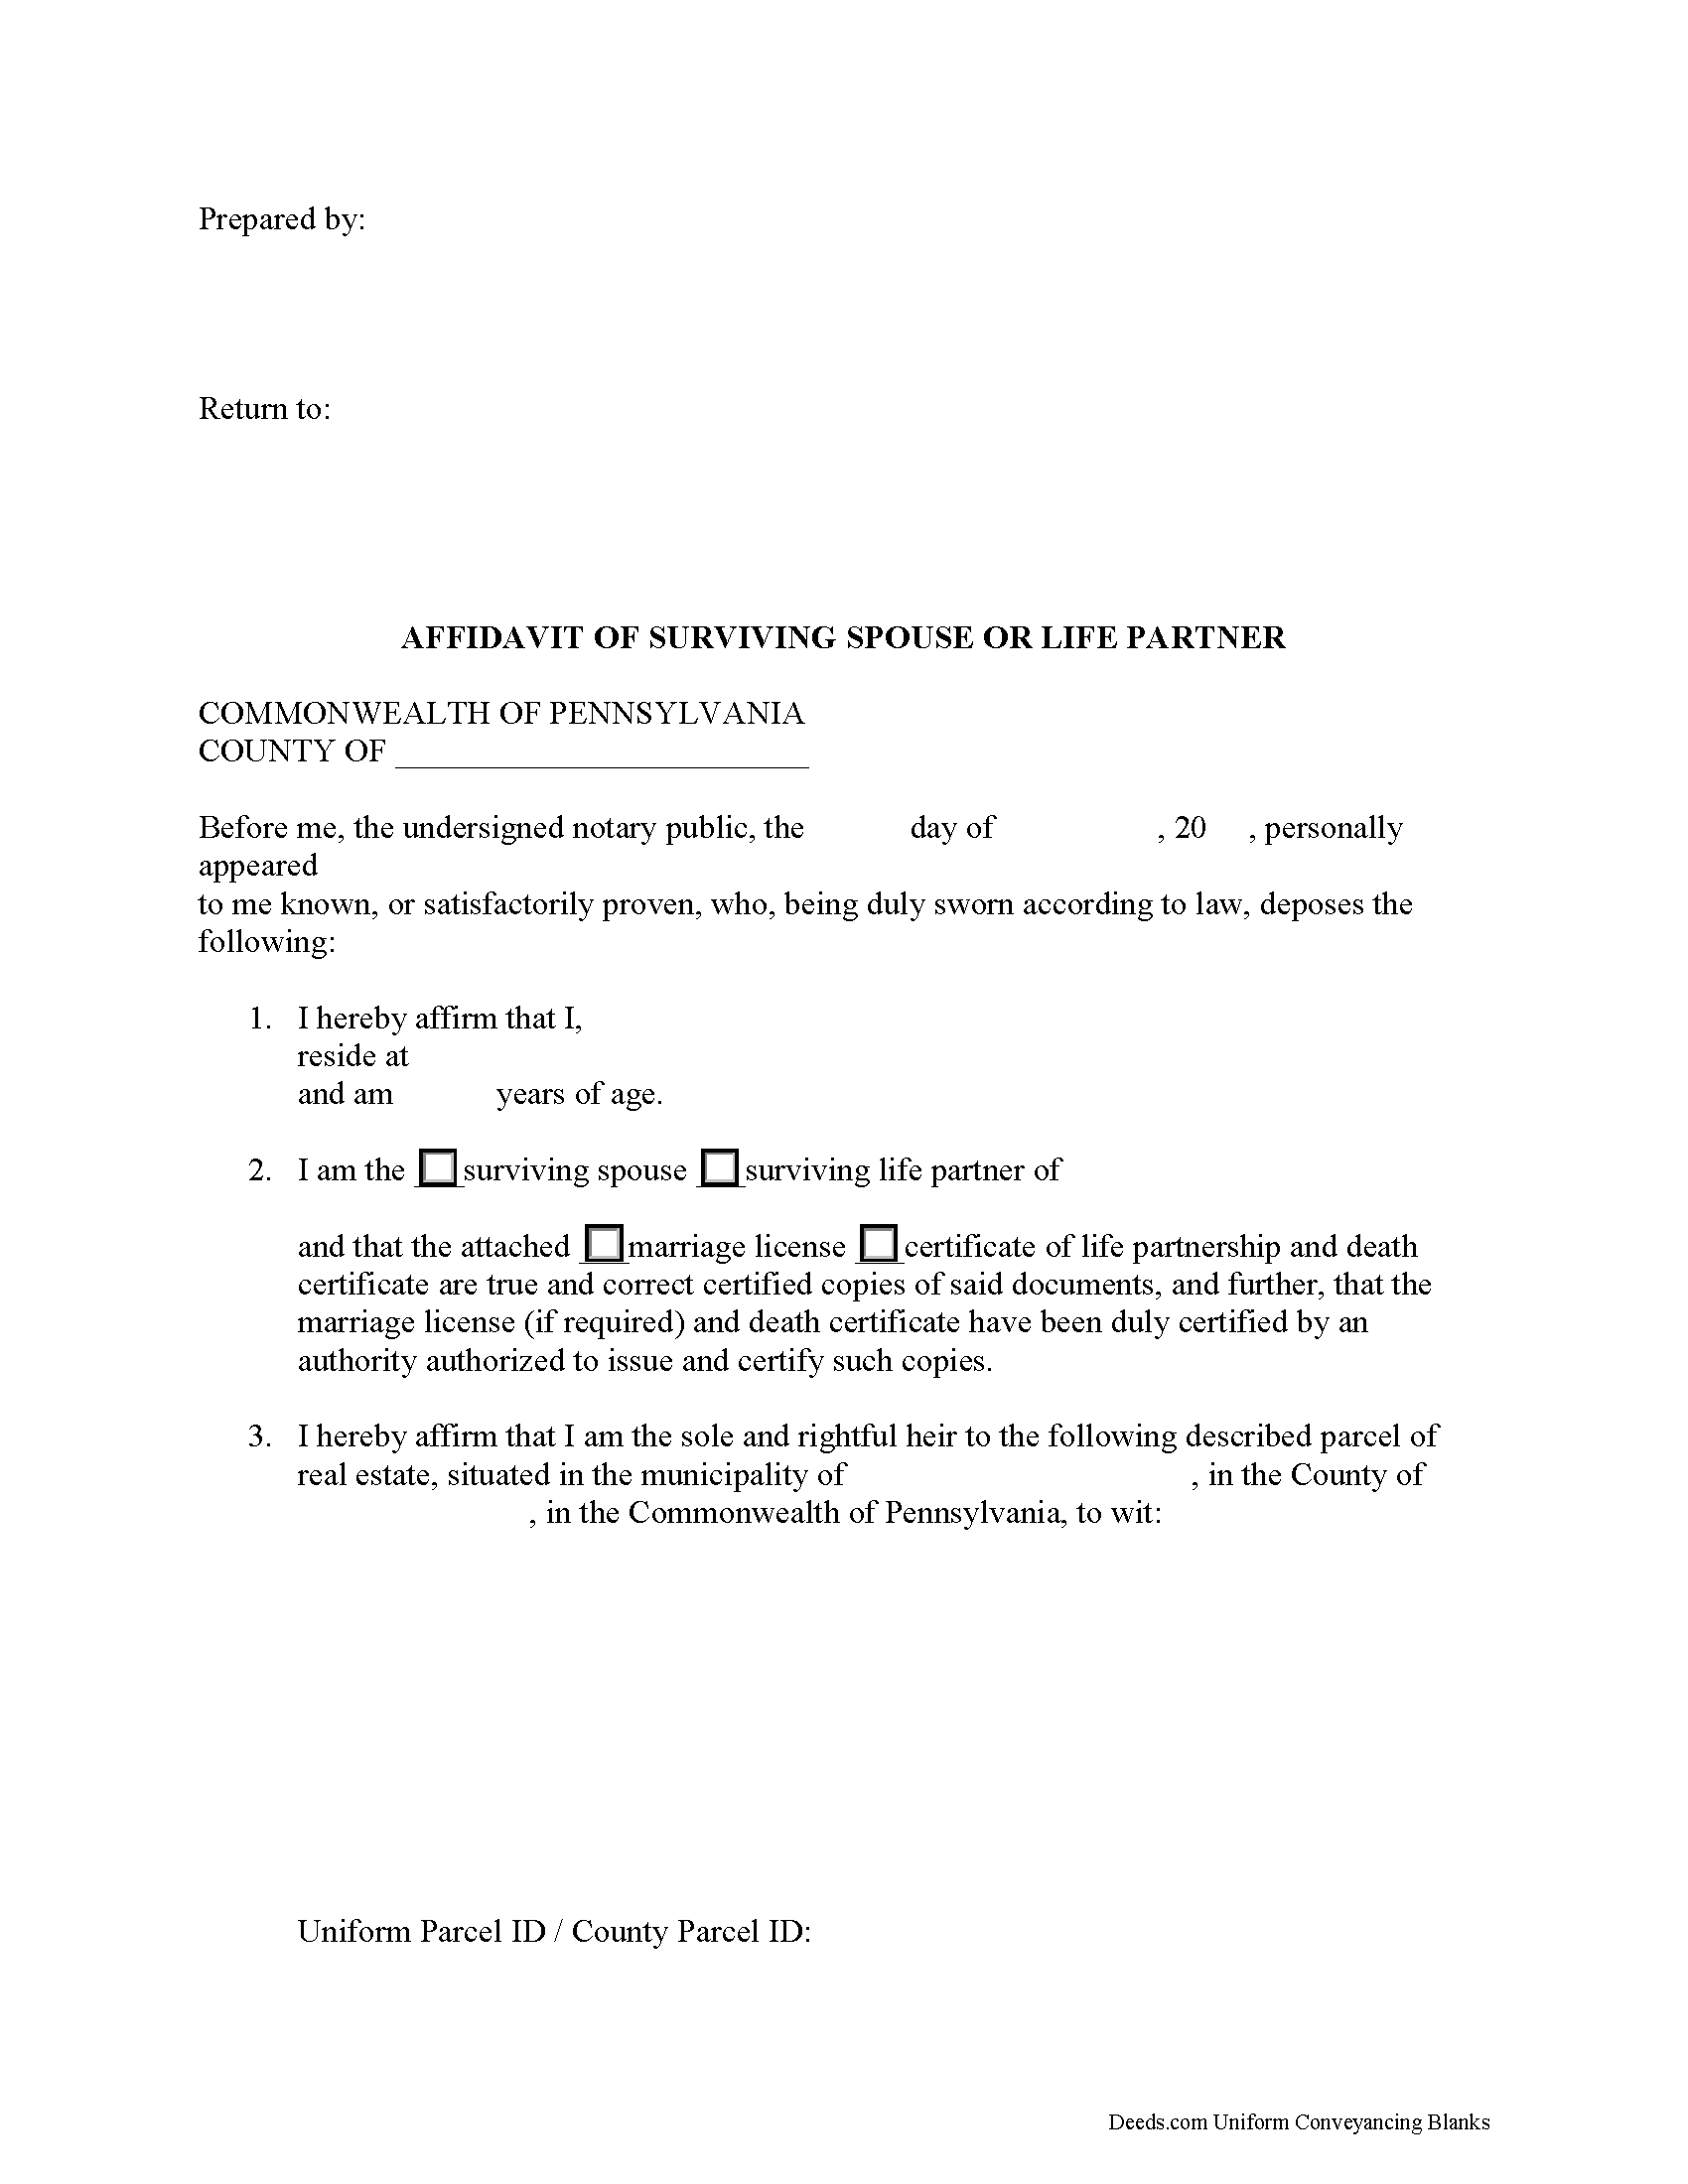 Pennsylvania Affidavit of Surviving Spouse Image